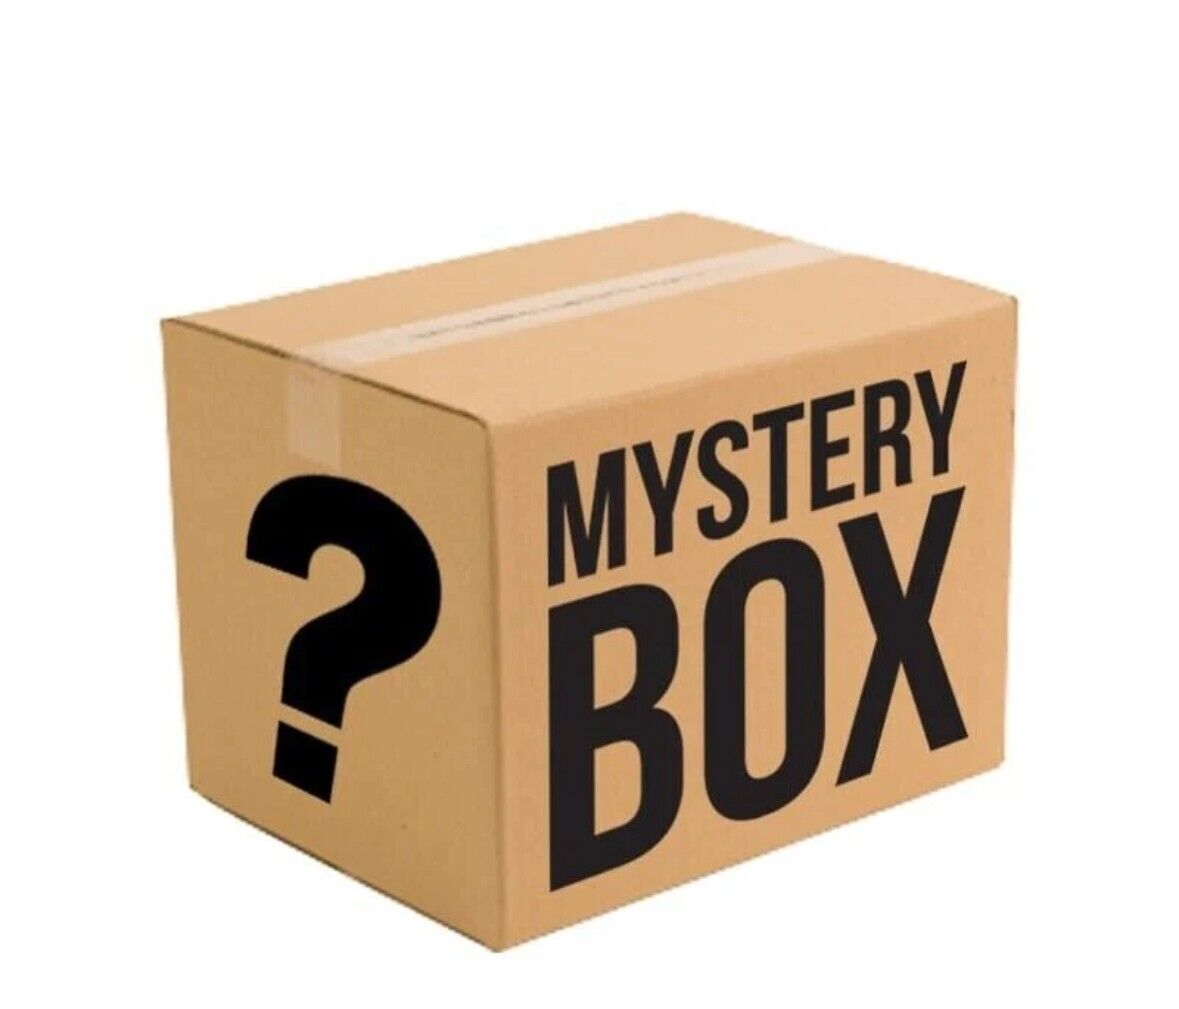 Pokemon mystery box